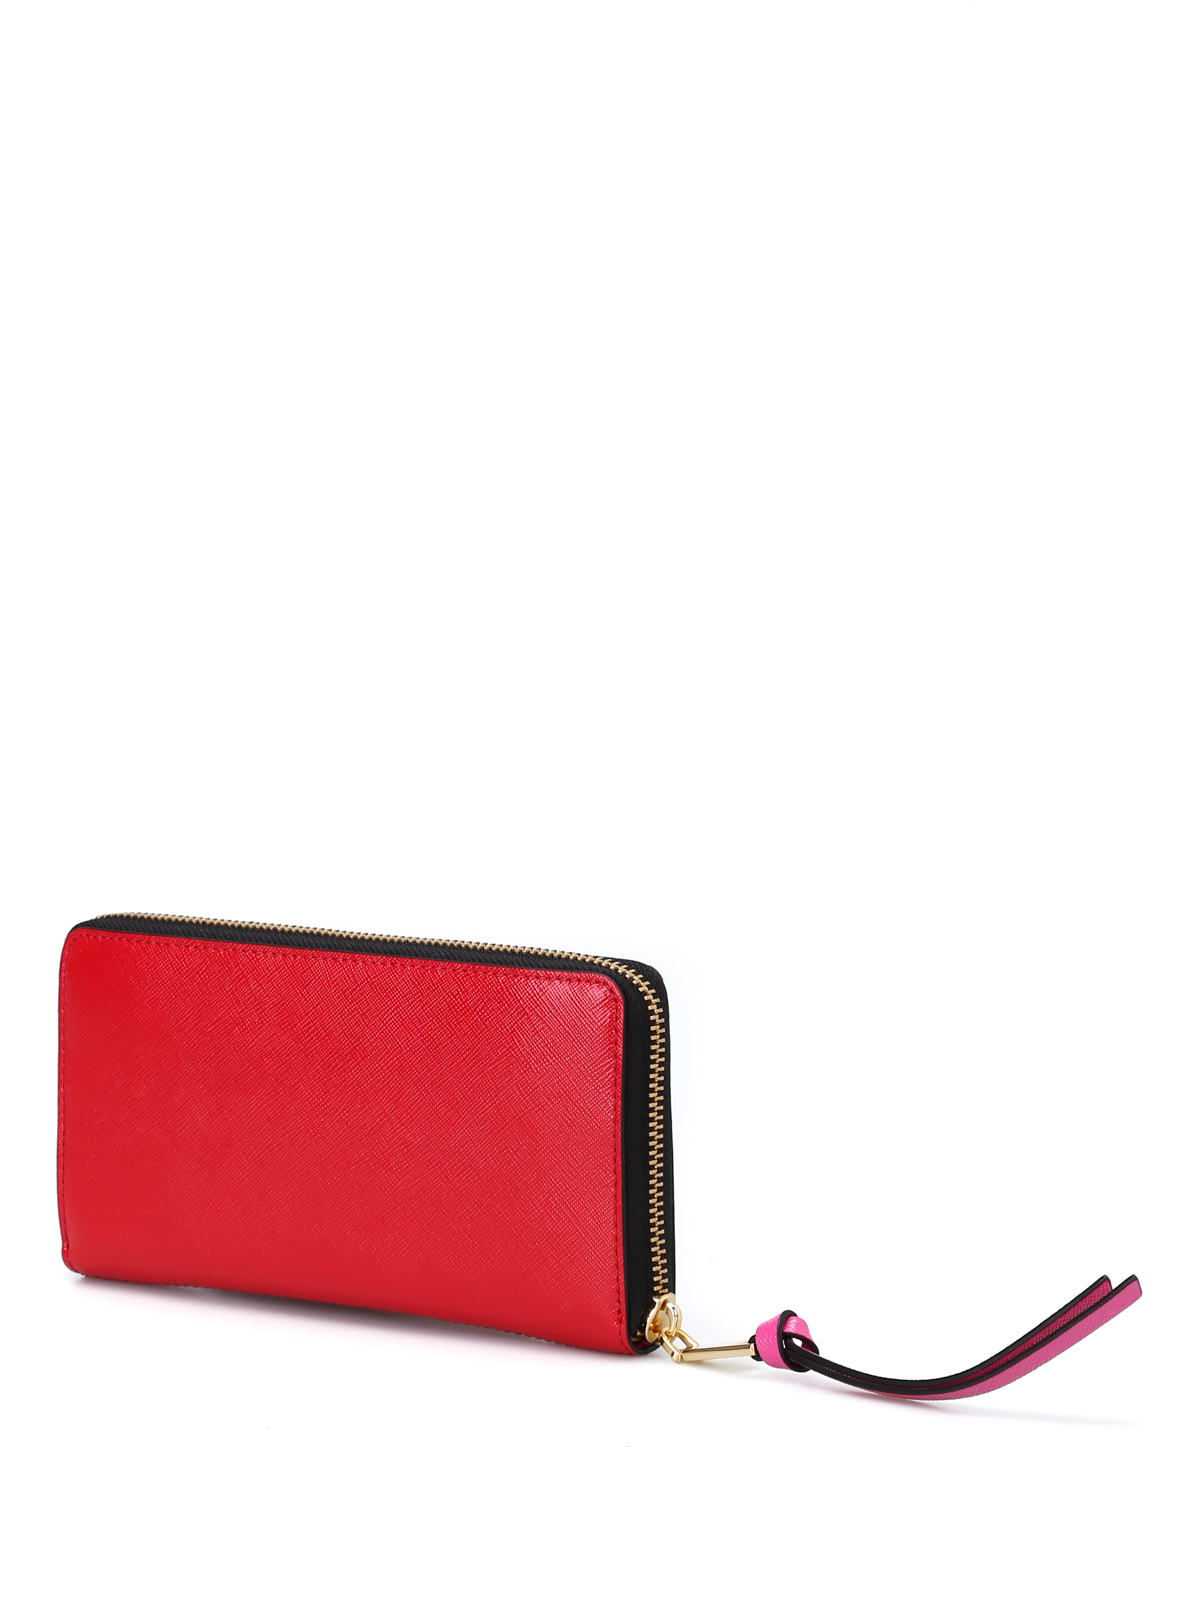 Wallets & purses - Fuchsia and saffiano wallet -